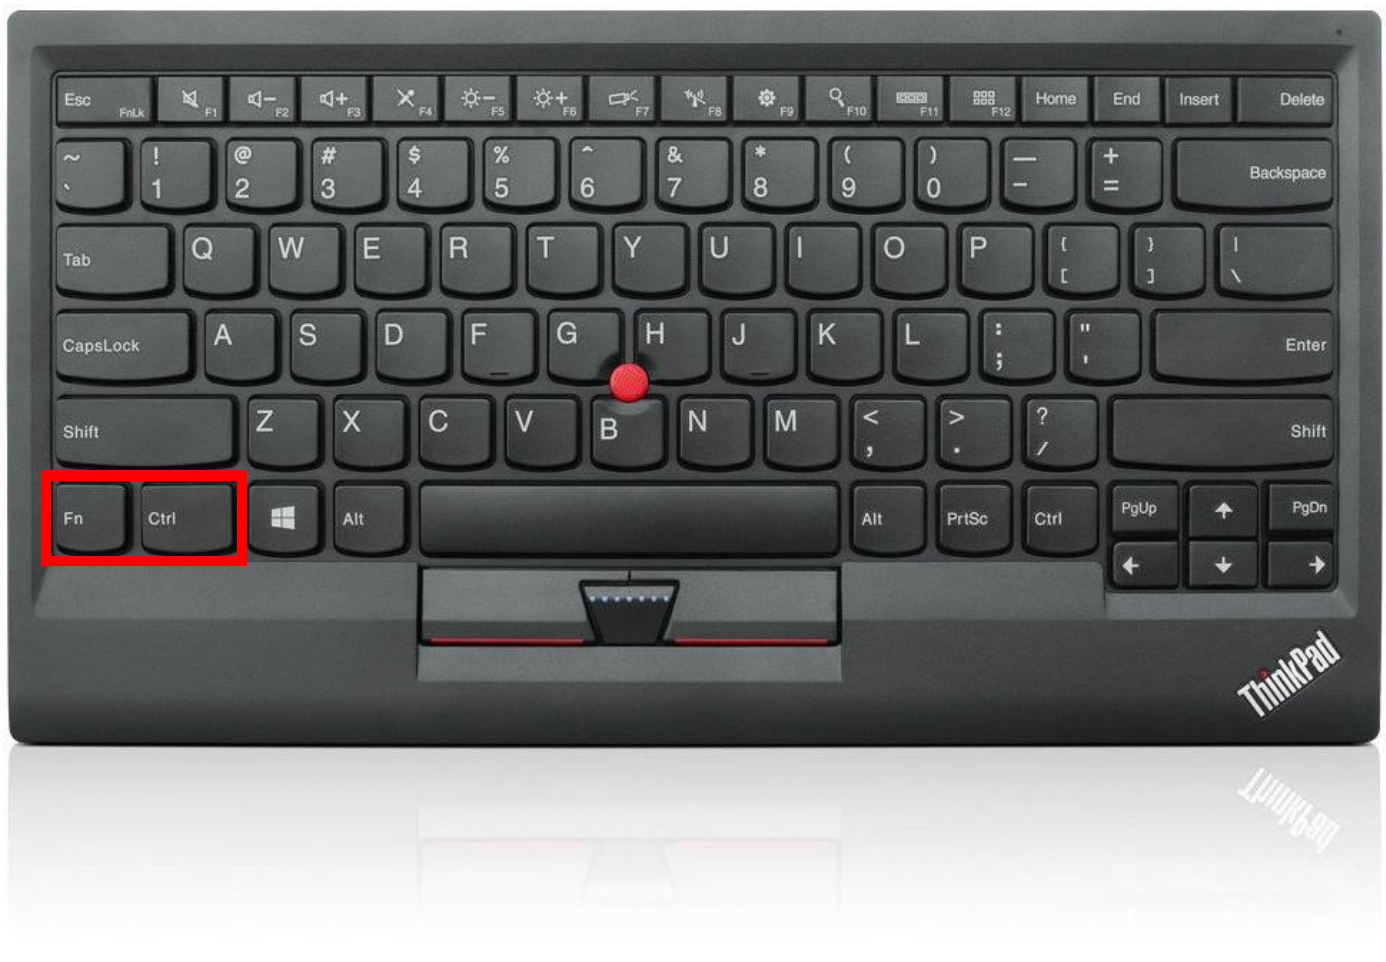 External-Thinkpad-Keyboard-KU-1255-switch-Fn-Ctrl-on-non-thinkpad-PC -  English Community - LENOVO COMMUNITY